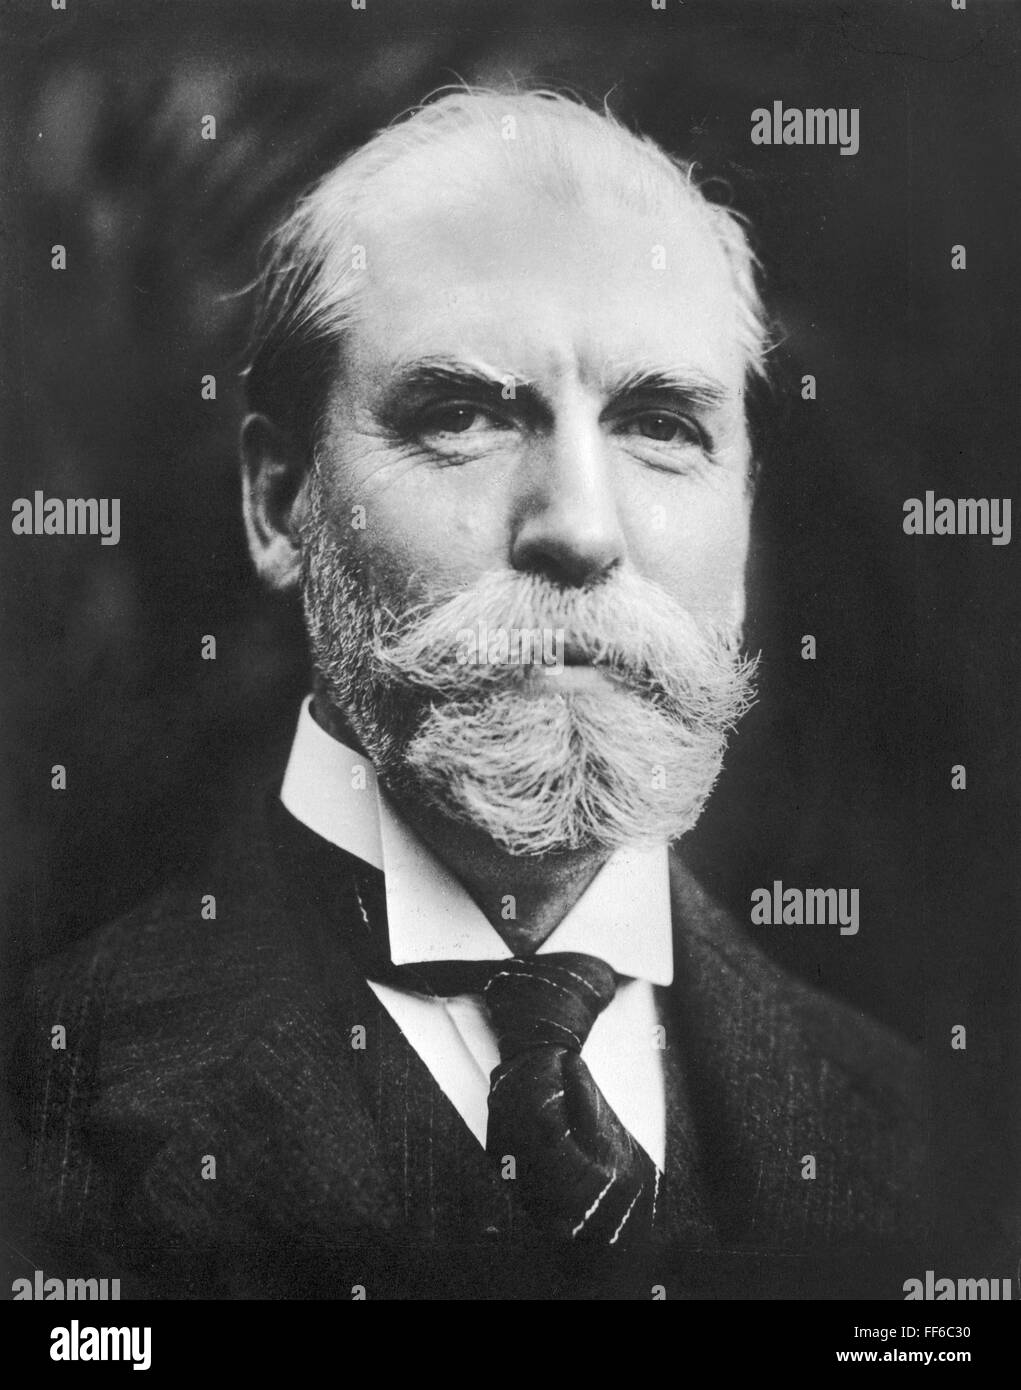 CHARLES EVANS HUGHES /n(1862-1948). American jurist. Stock Photo